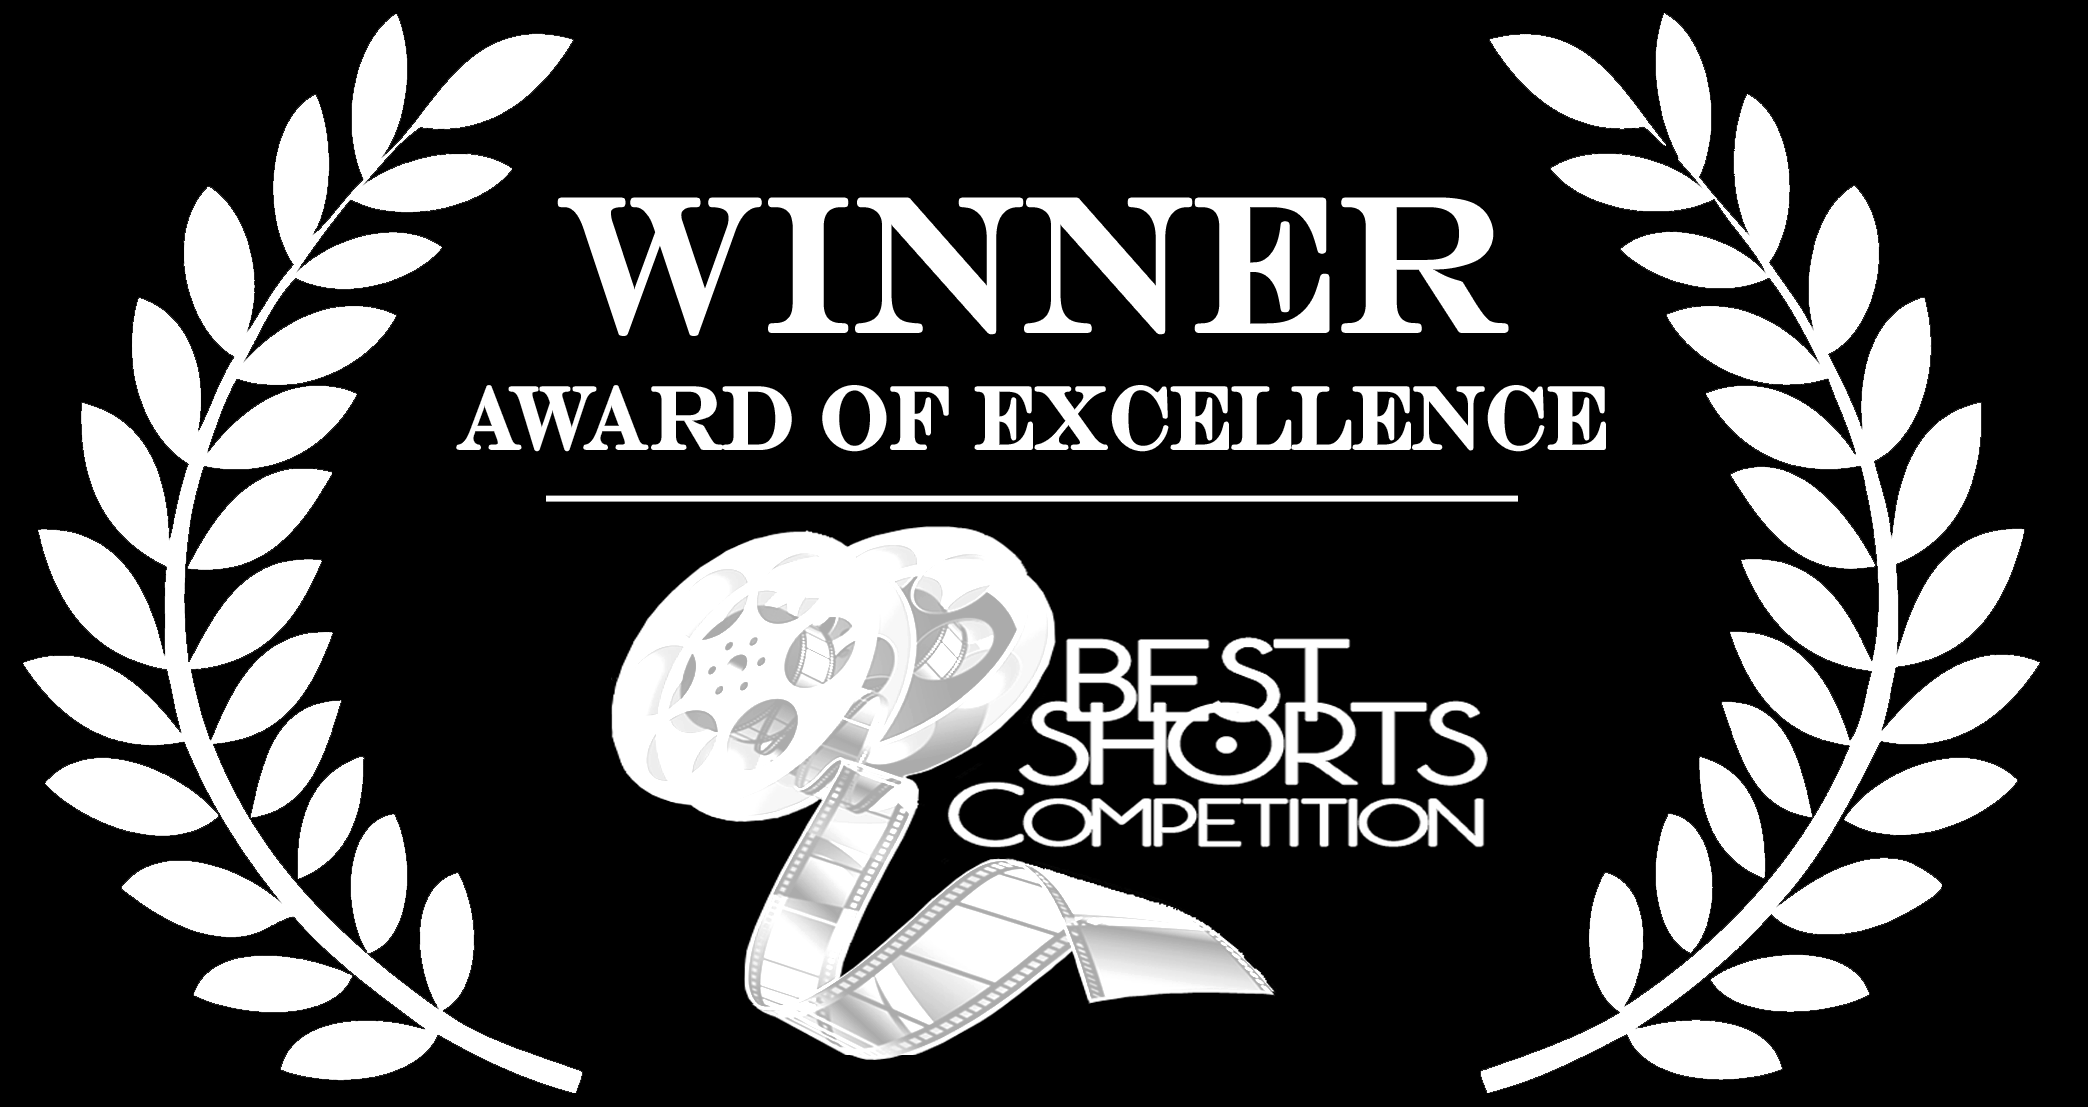 BEST SHORTS Excellence logo white on black background